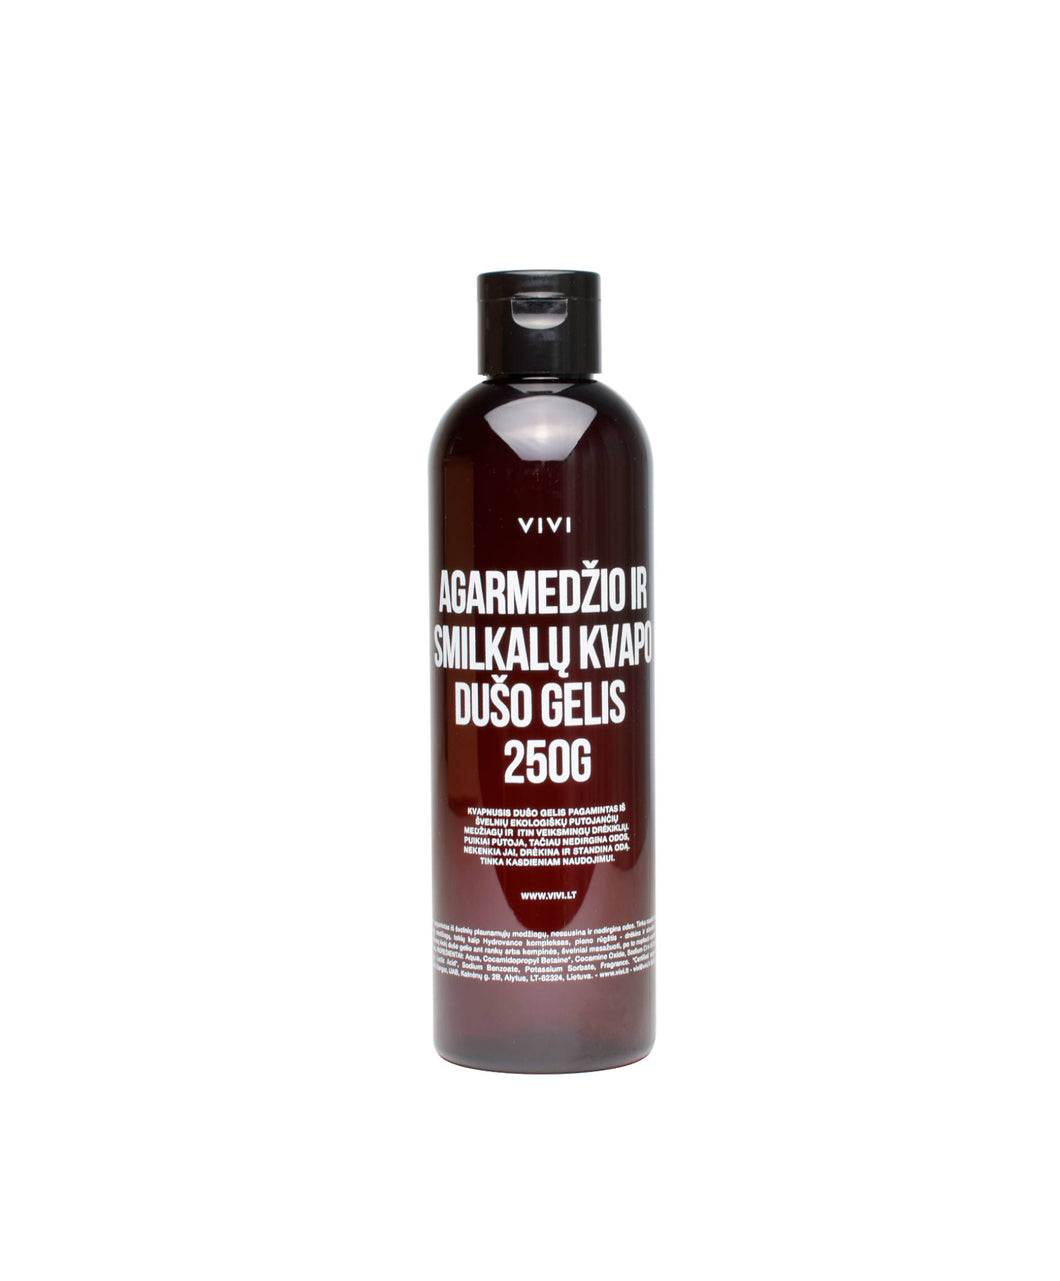 Shower gel with balsam fir and frankincense fragrance, 250g.